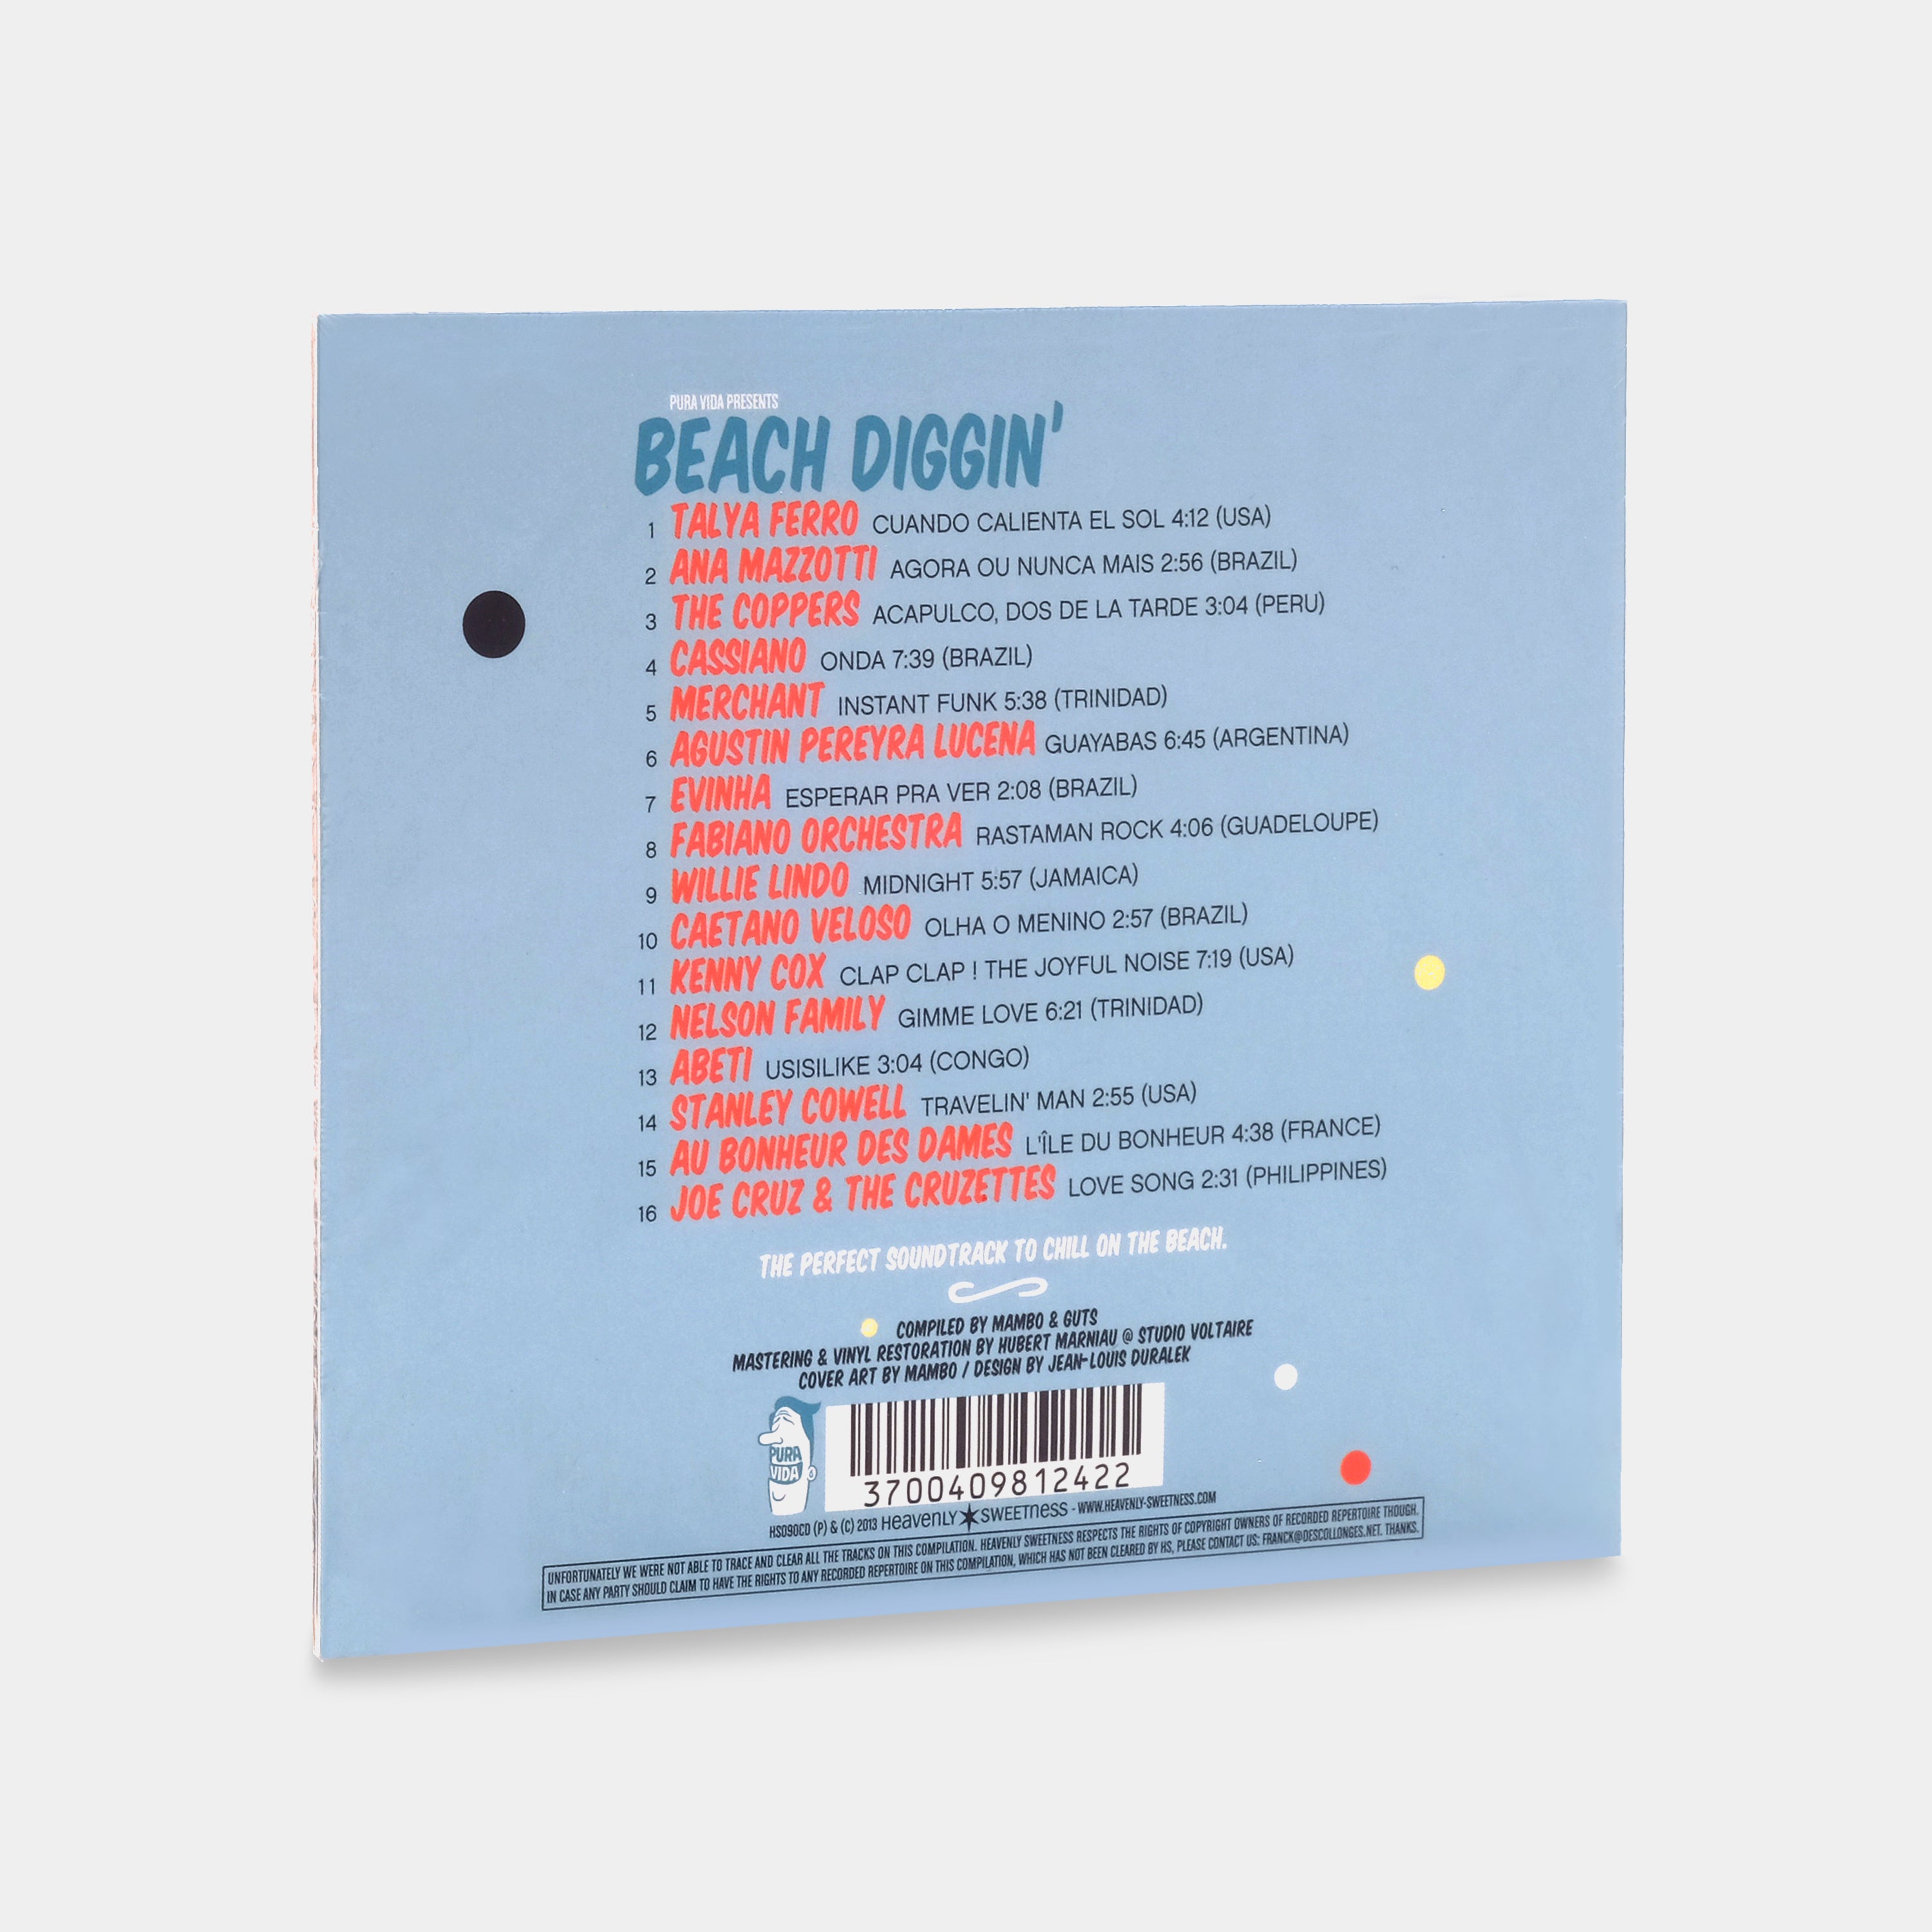 Pura Vida Presents: Beach Diggin' Volume 1 CD